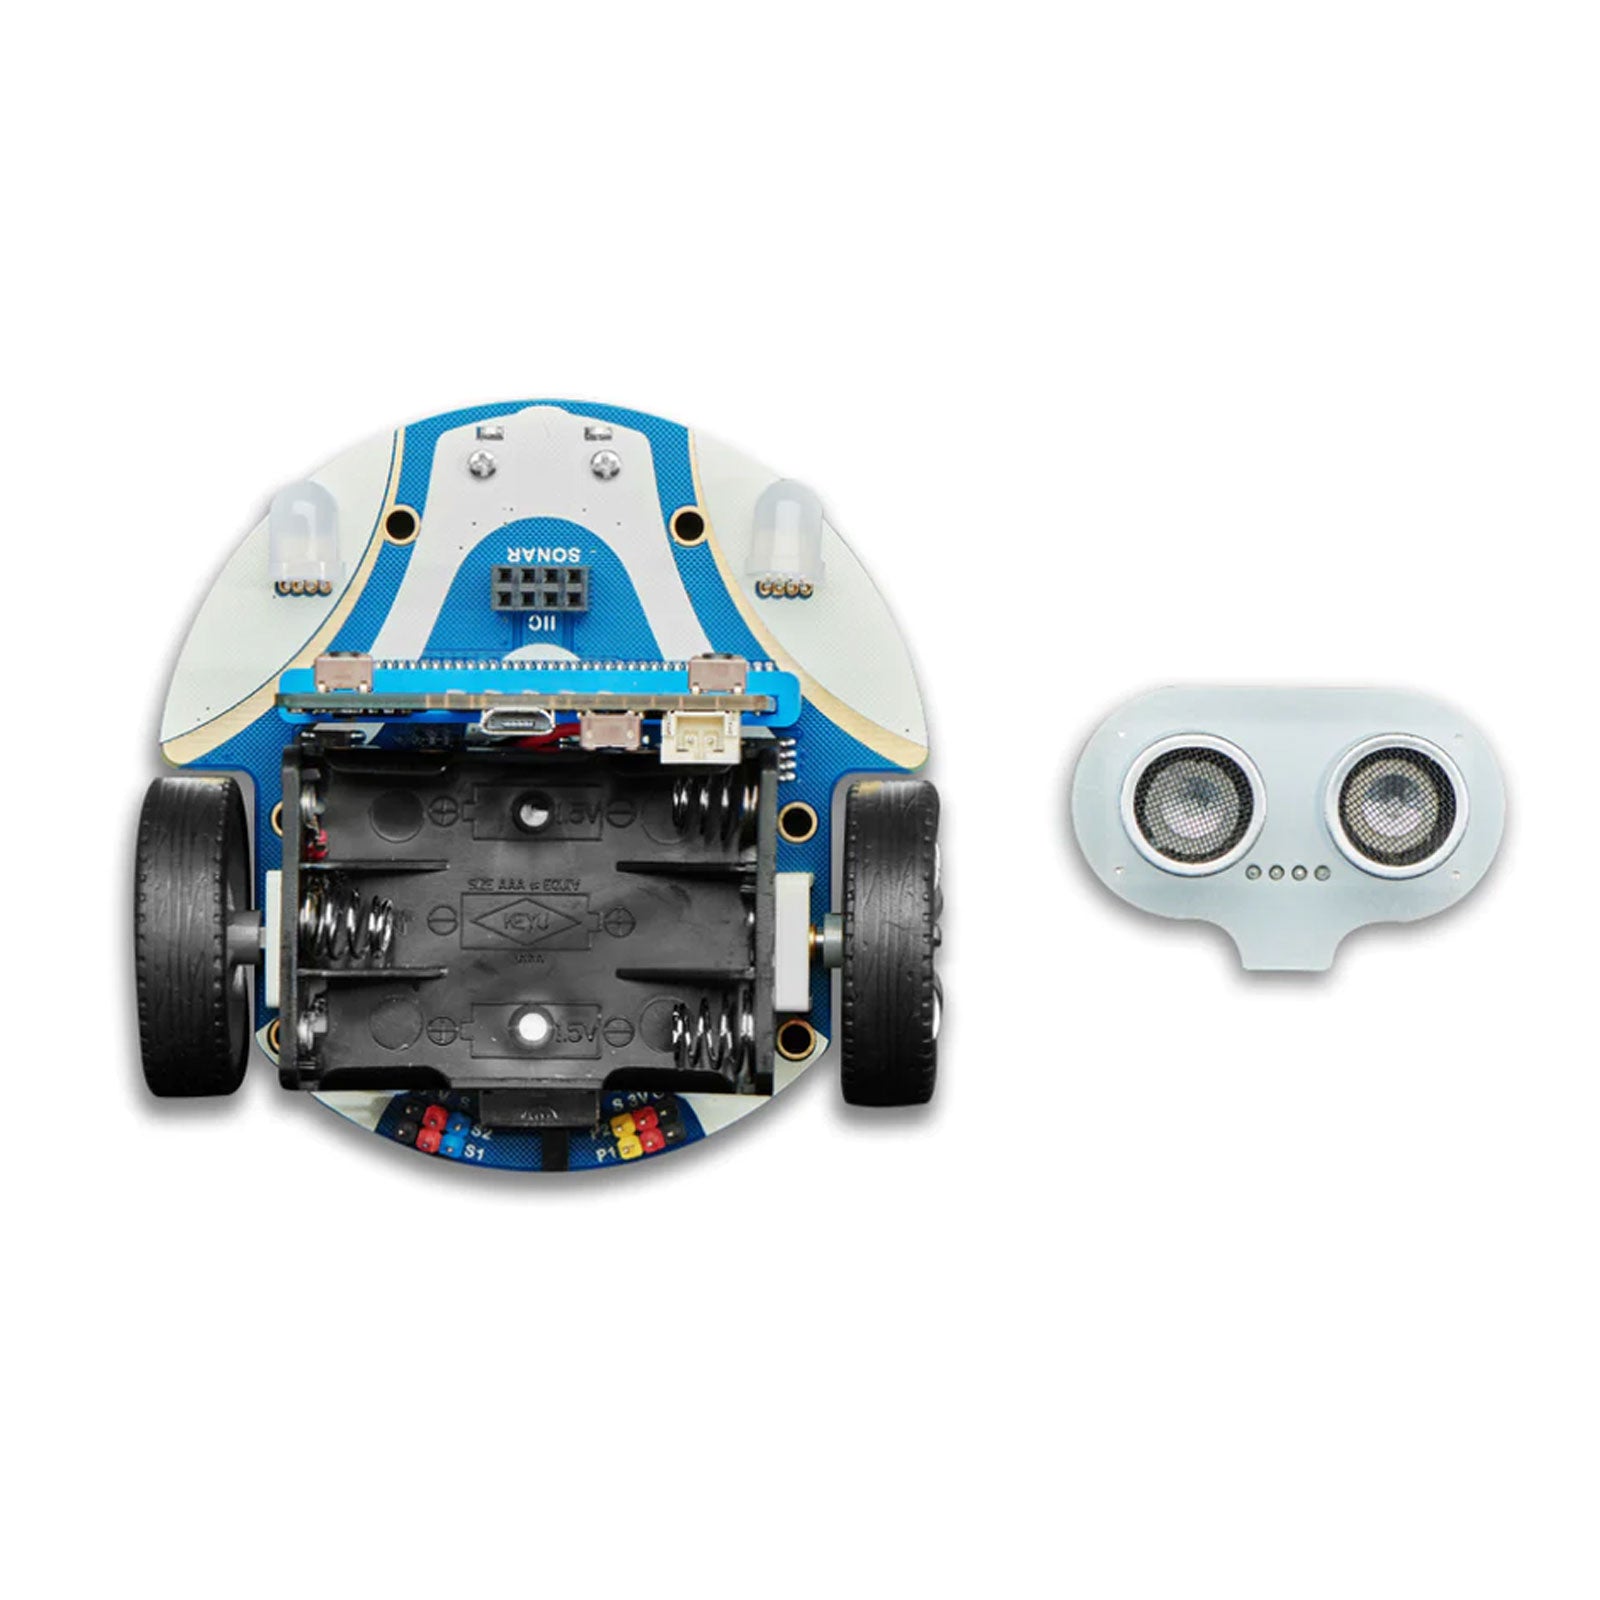 ELECFREAKS microbit Robot Smart Cutebot Kit (Without microbit Board)